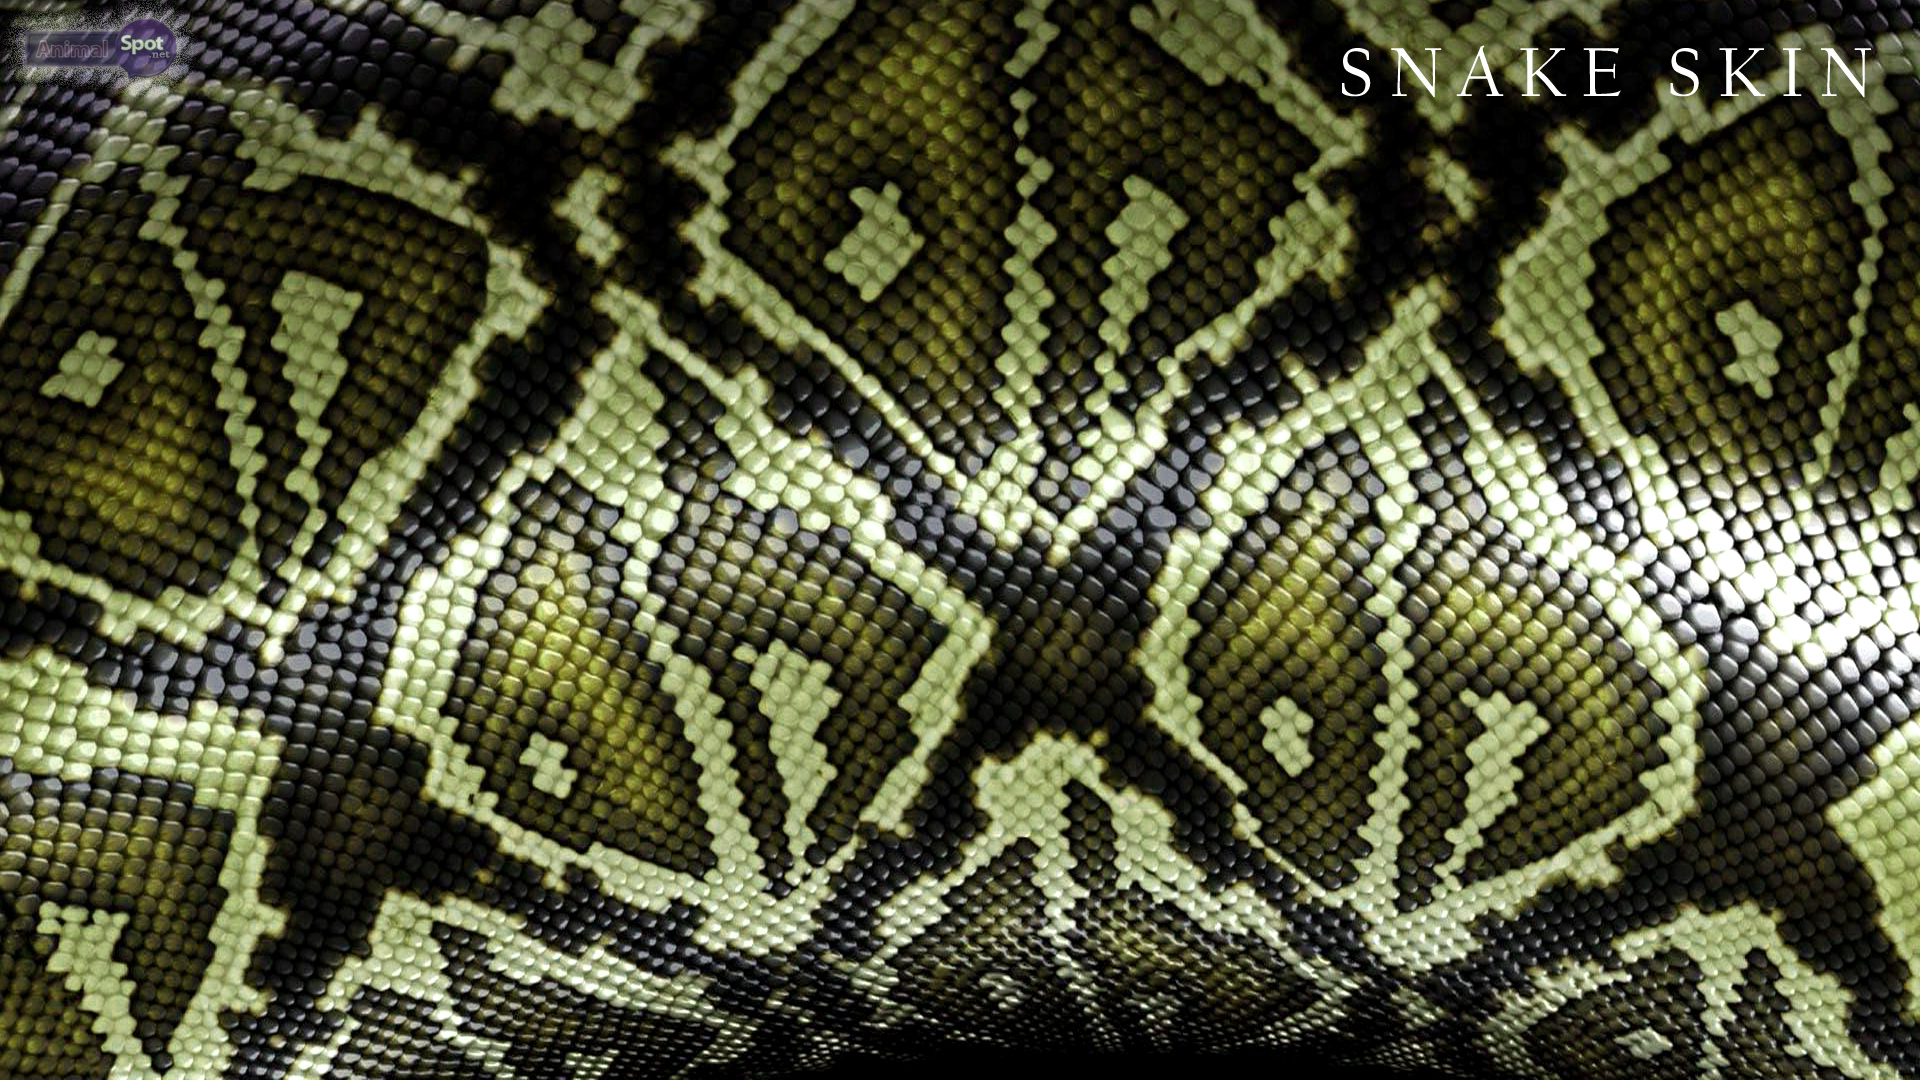 Snake Skin - Nisartmacka.com